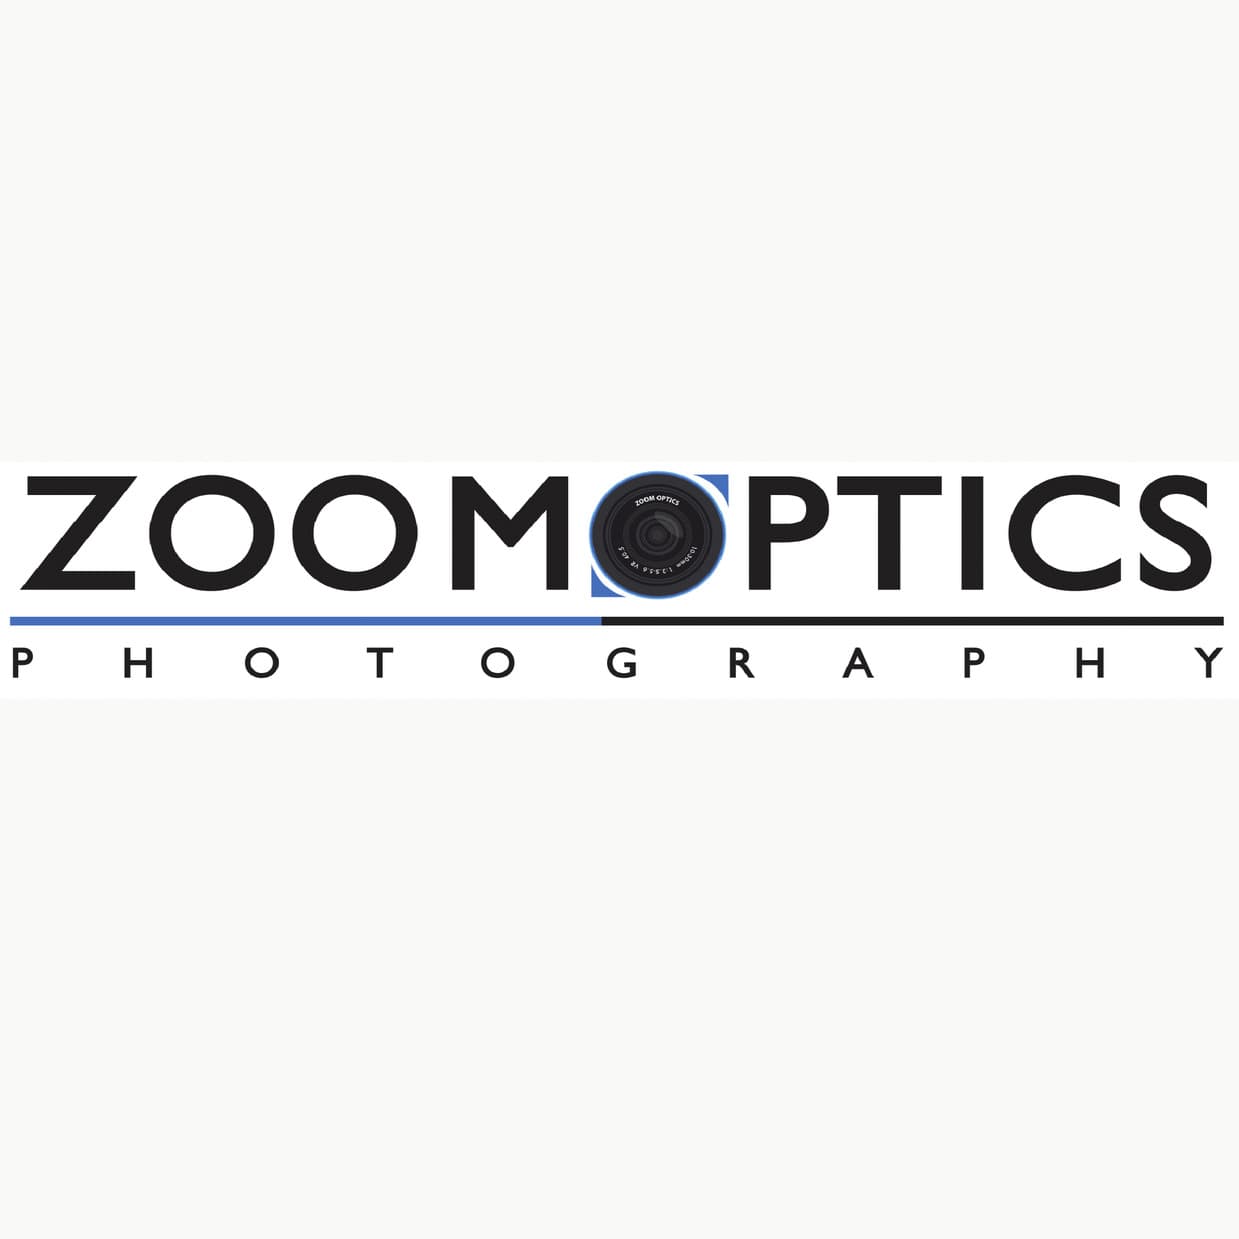 Zoomoptics Photography